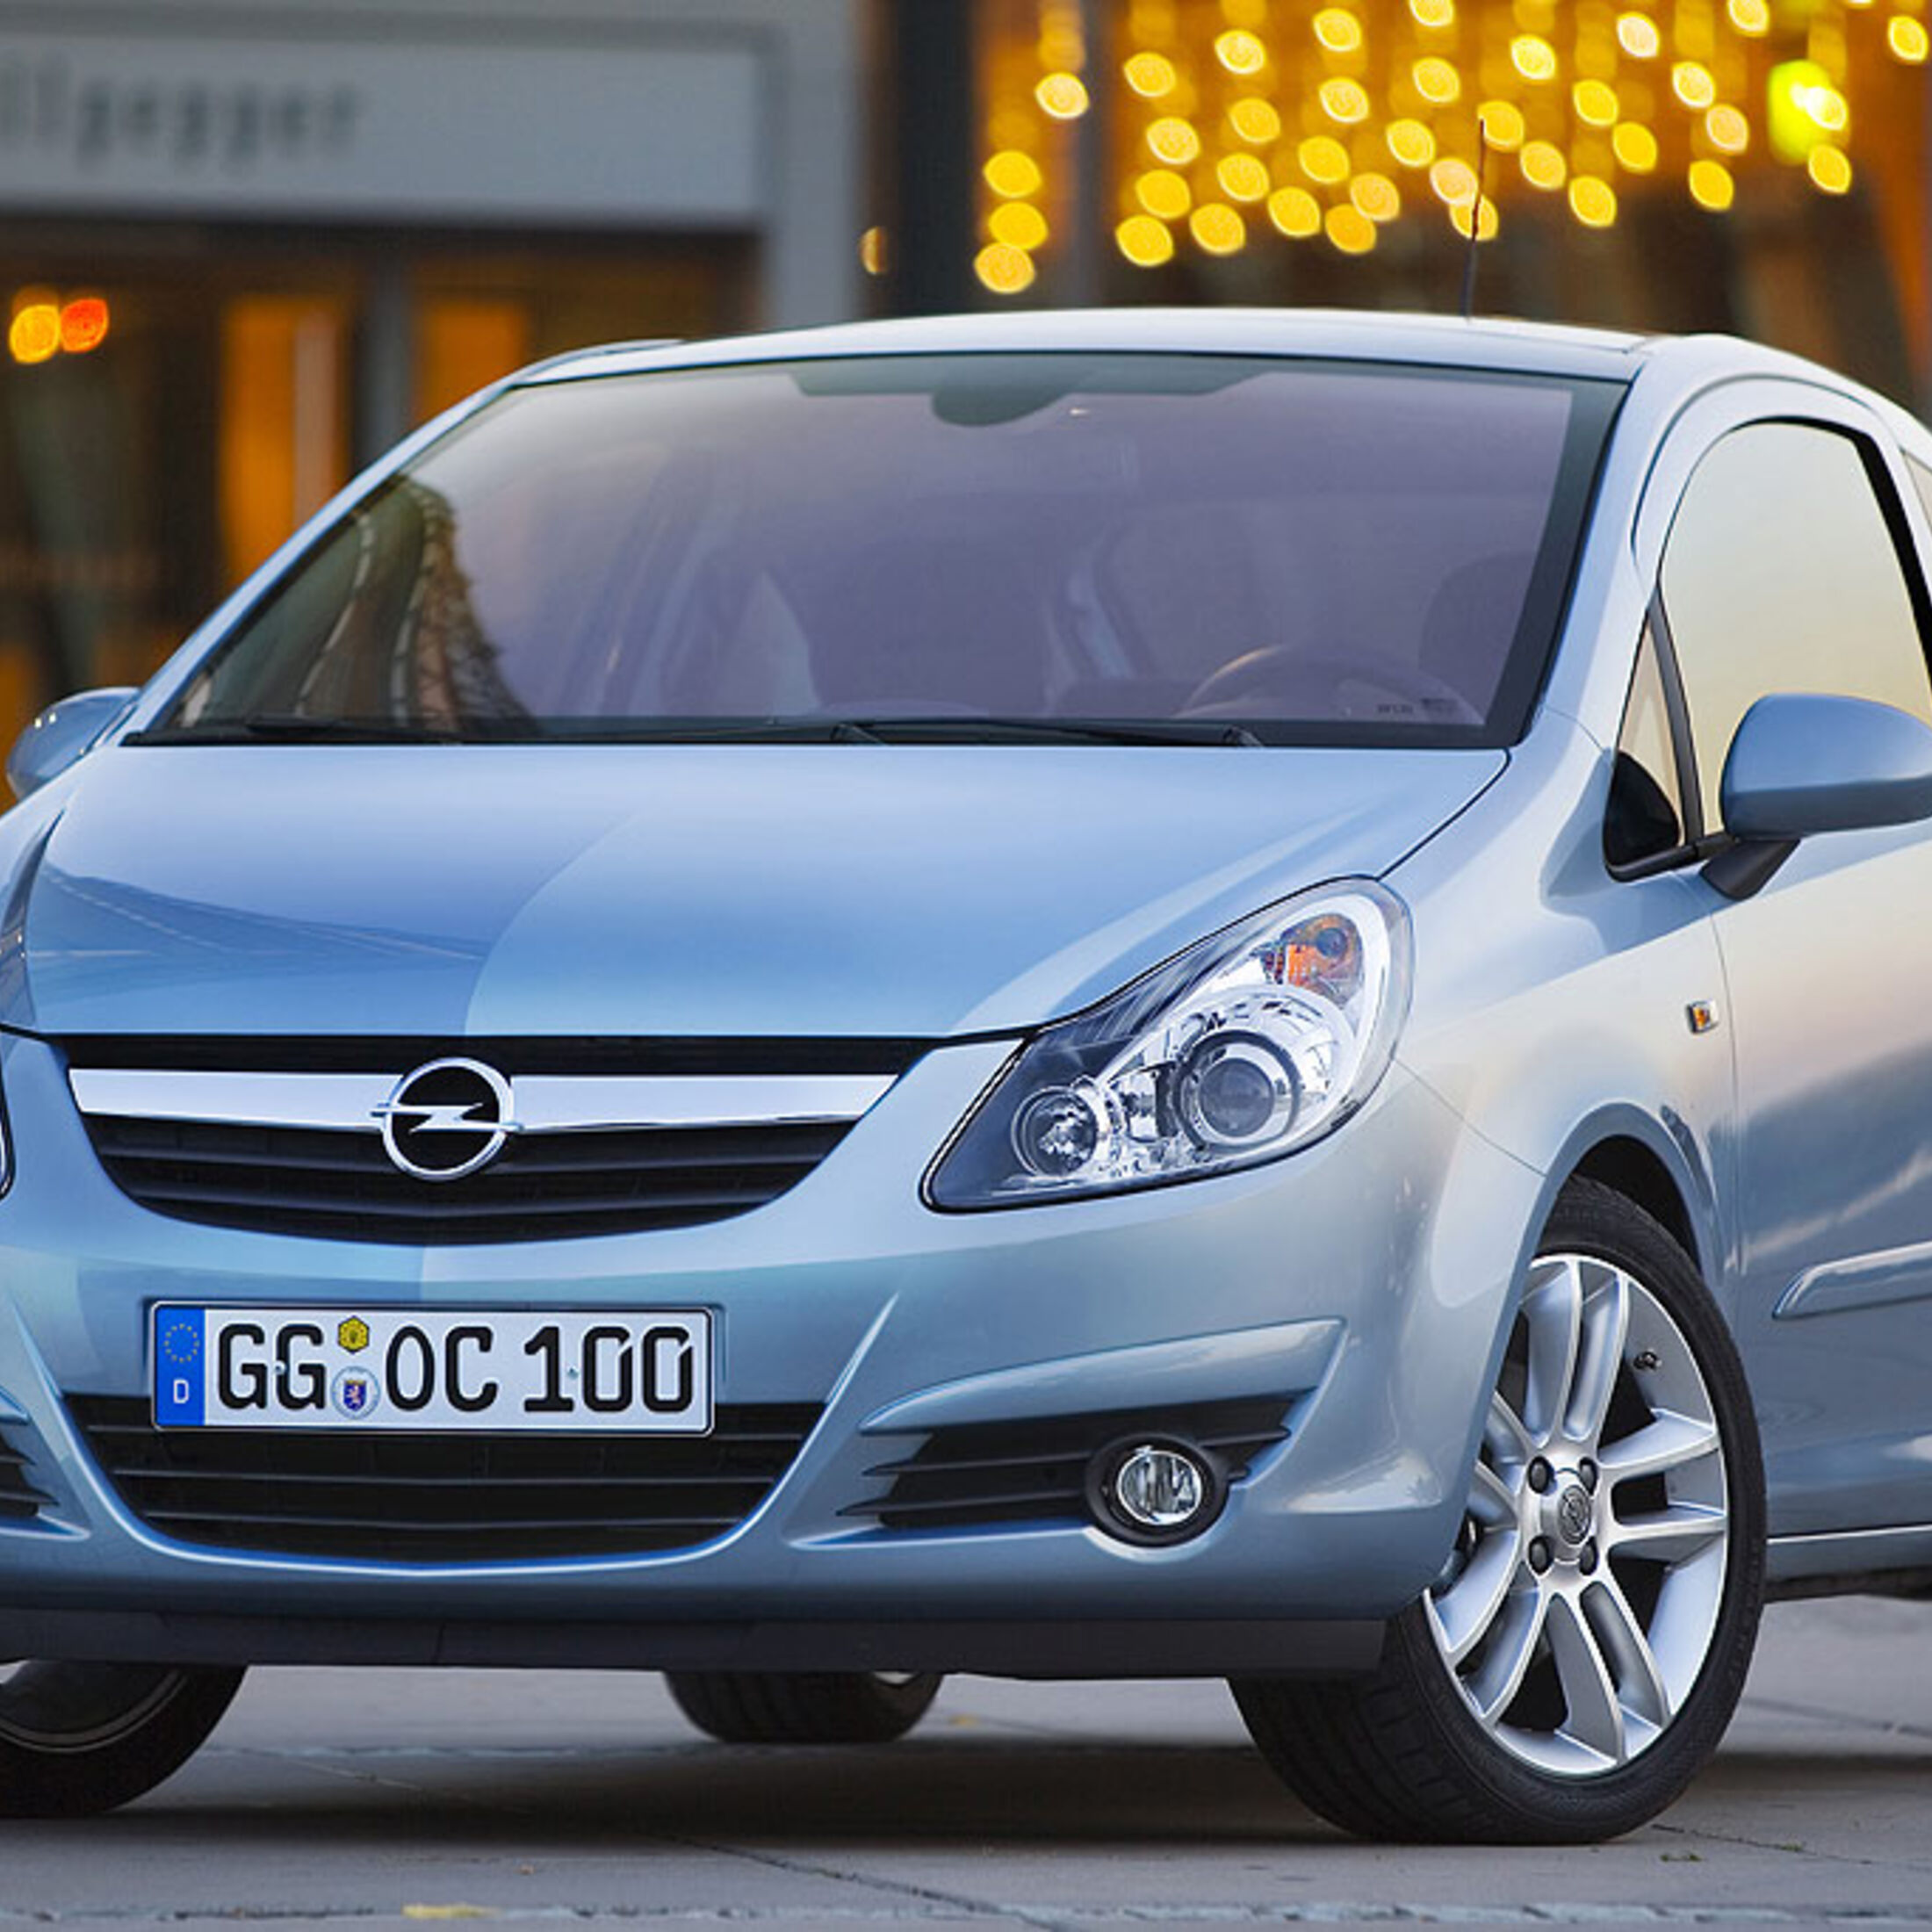 Opel Corsa D und Opel Movano: Doppel-Rückruf für Opel-Modelle